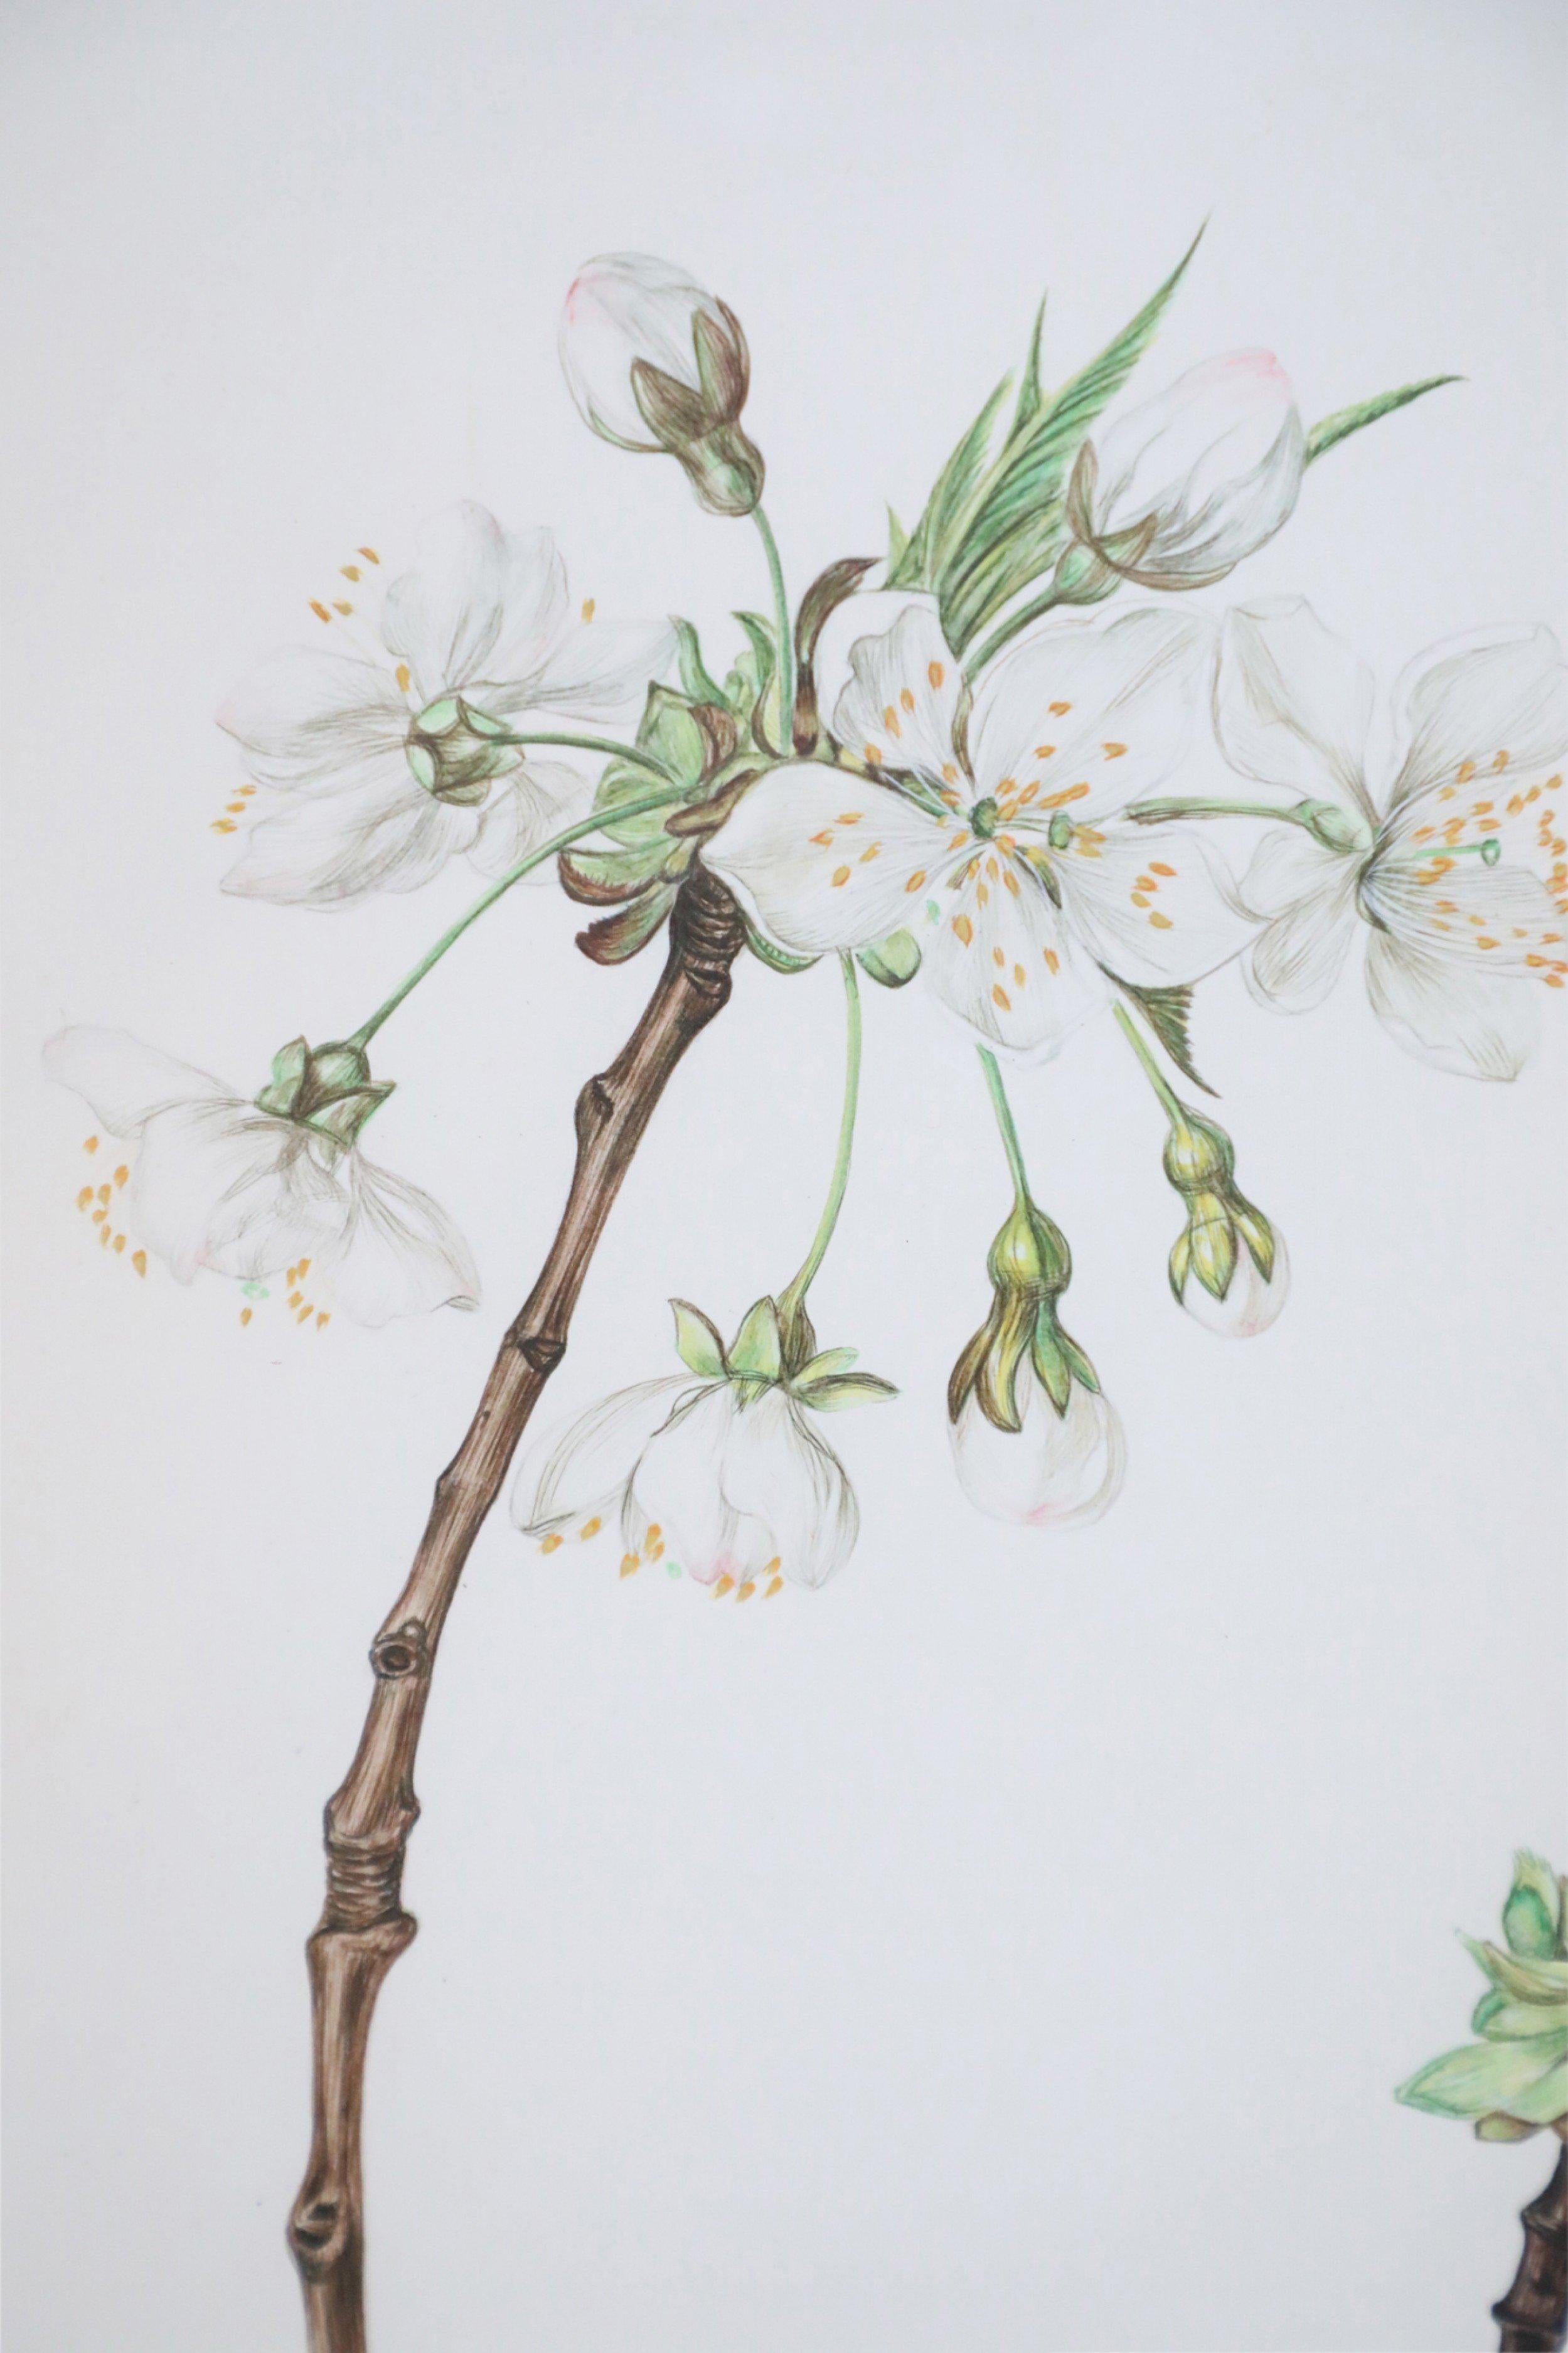 Glass Framed Illustration of a Budding Flower Branch For Sale